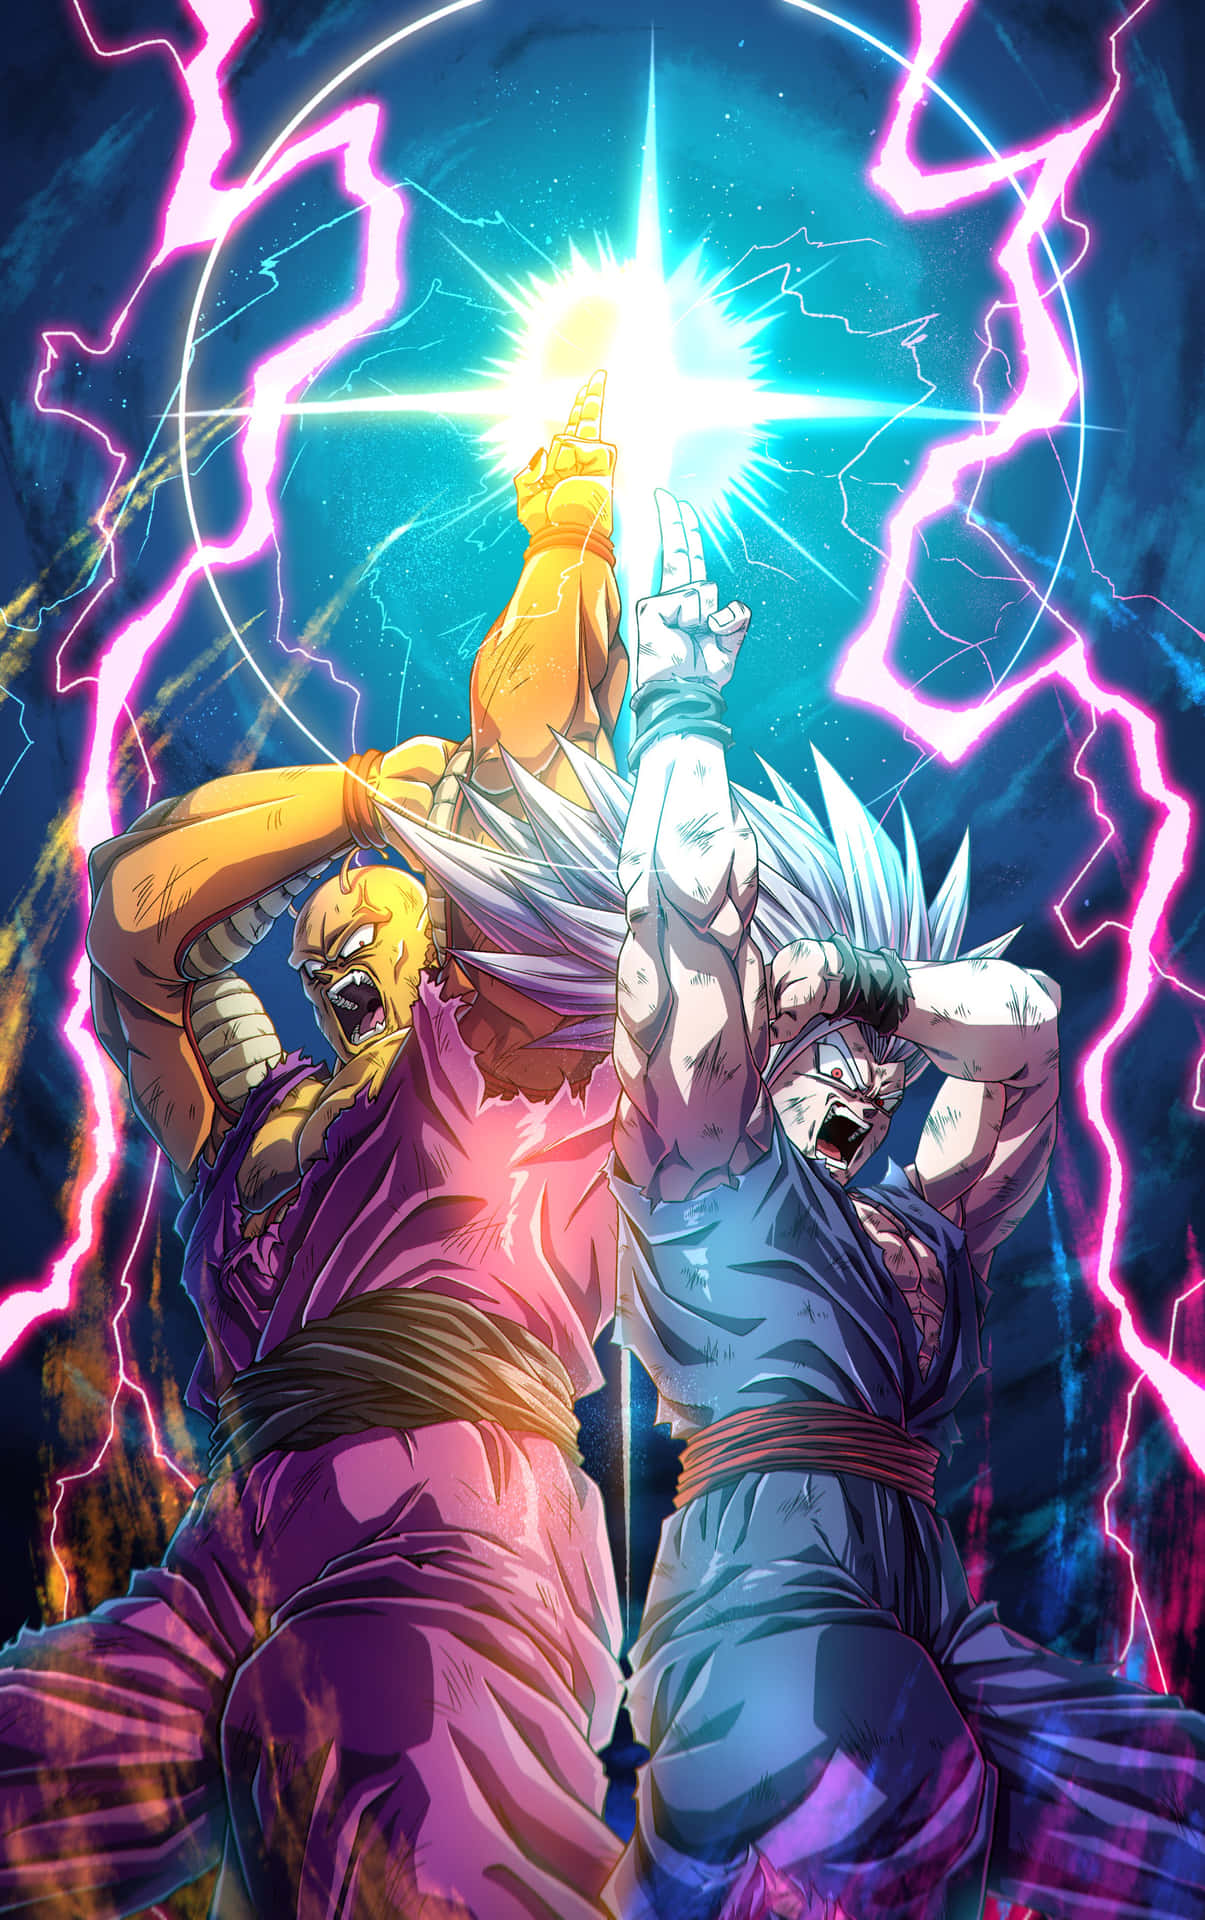 Epic_ Anime_ Battle_ Electric_ Backdrop.jpg Wallpaper